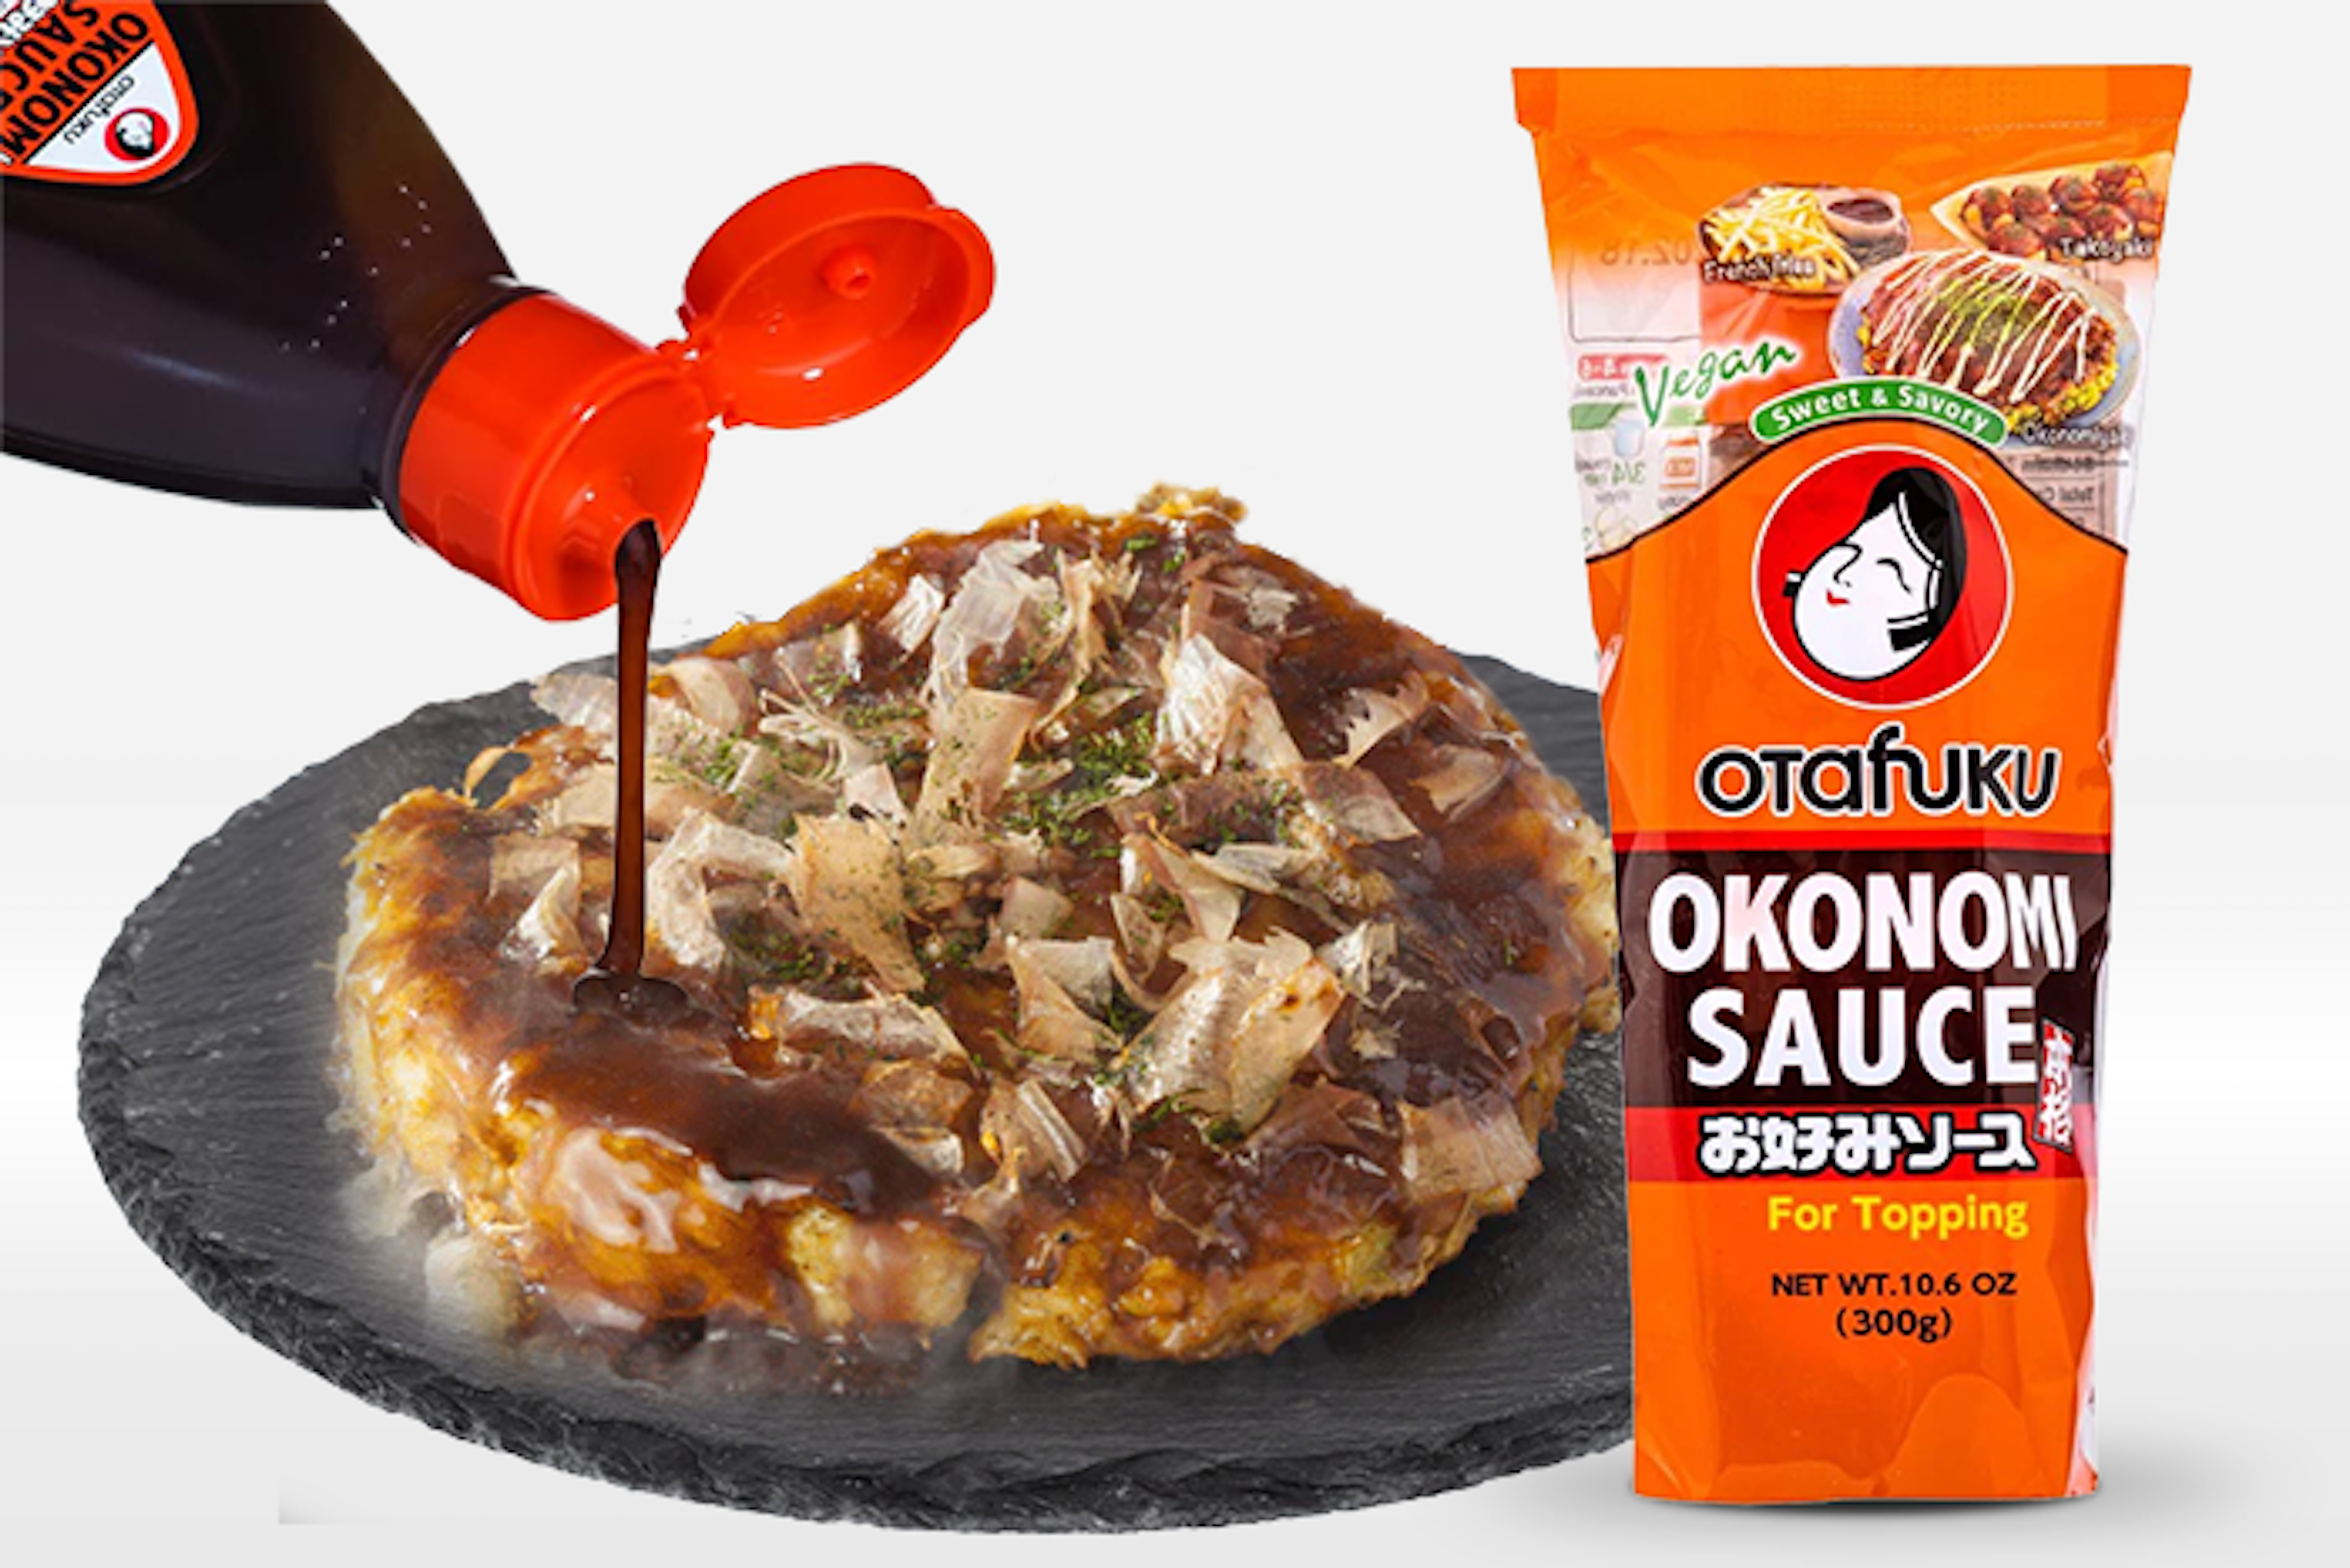 Otafuku Okonomi Sauce 300g - Otafuku Sauce als Teil eines japanischen Rezepts.